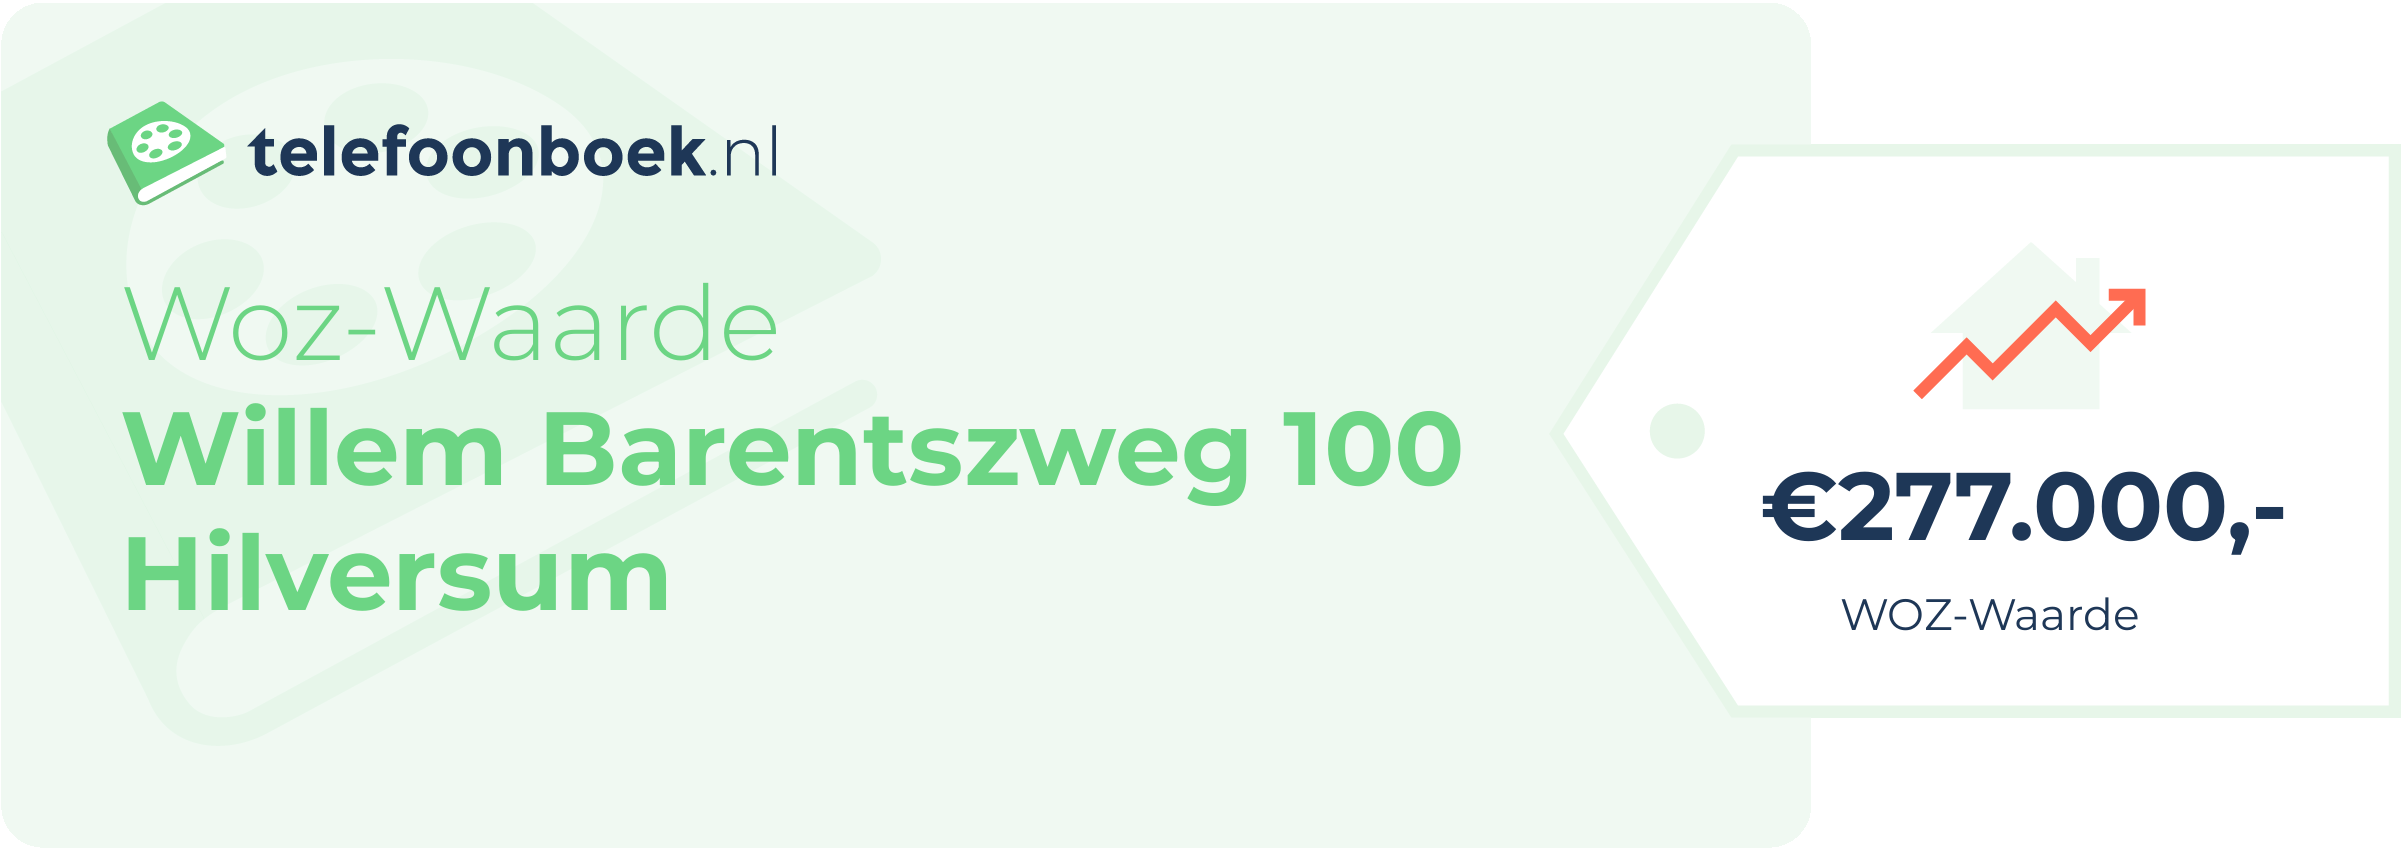 WOZ-waarde Willem Barentszweg 100 Hilversum